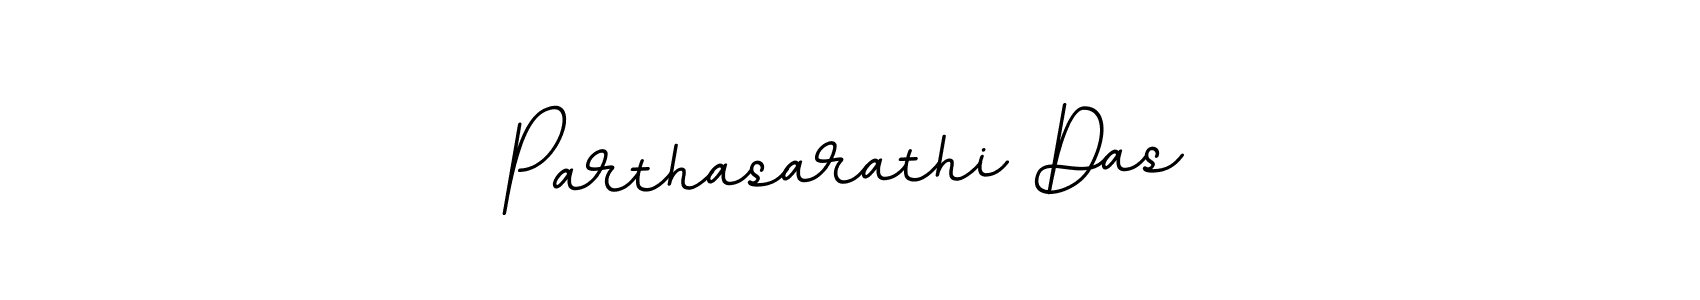 How to Draw Parthasarathi Das signature style? BallpointsItalic-DORy9 is a latest design signature styles for name Parthasarathi Das. Parthasarathi Das signature style 11 images and pictures png